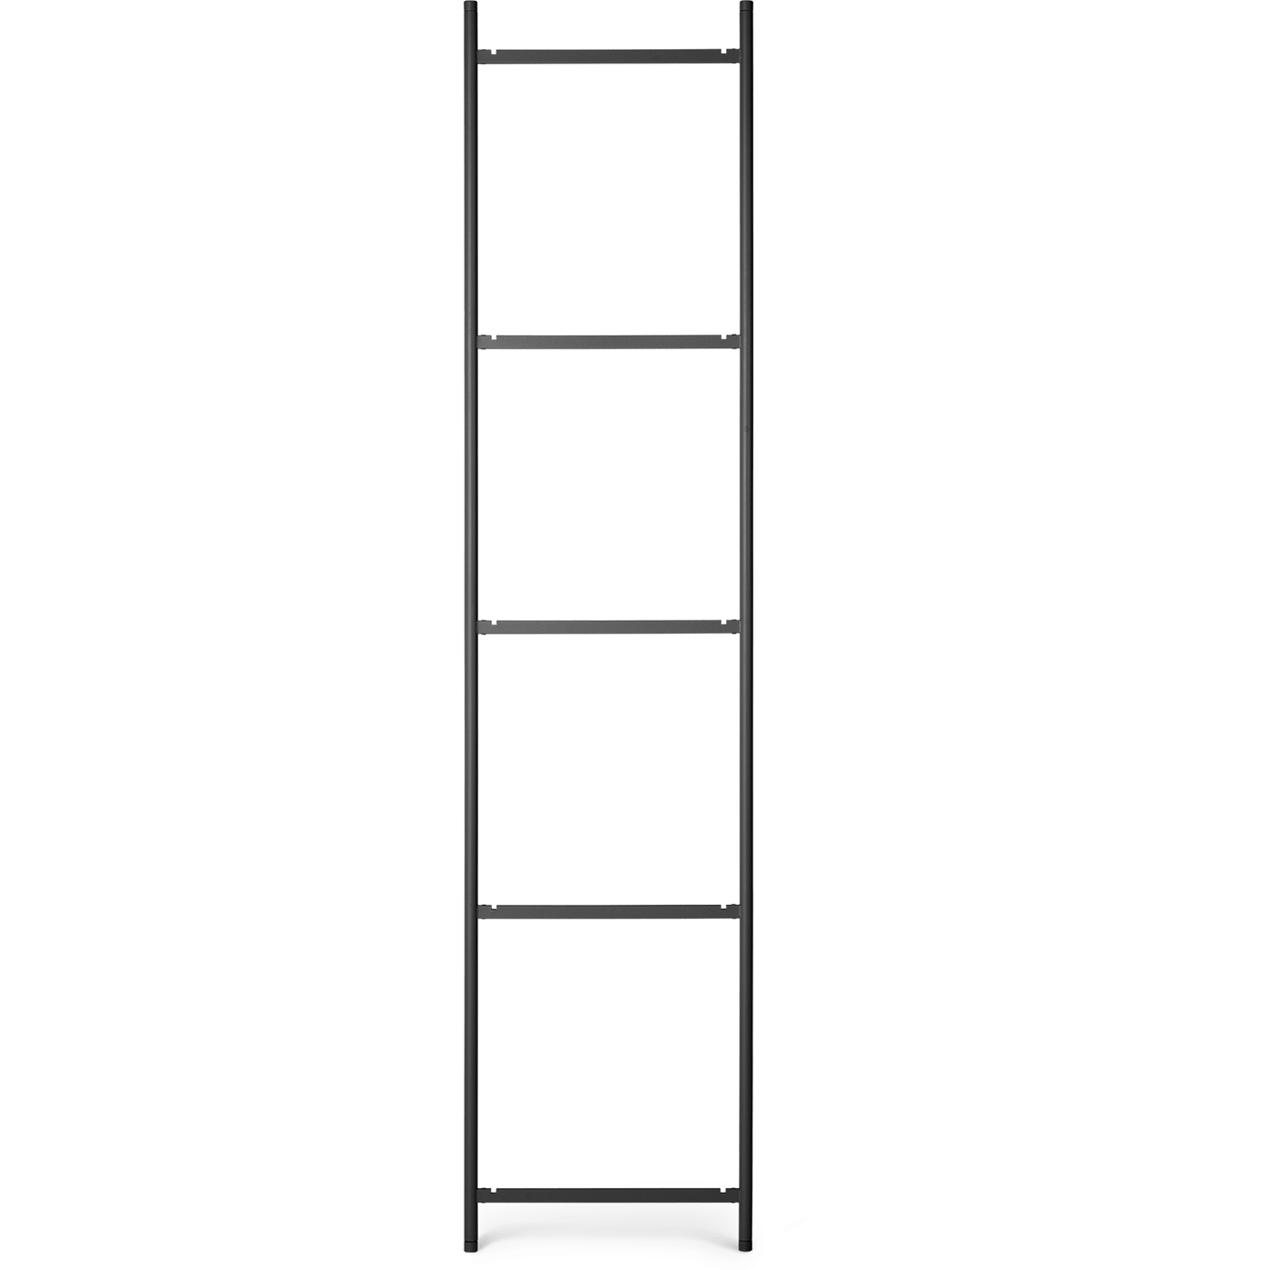 Ferm Living Punctual Modular Shelving System Ladder 5